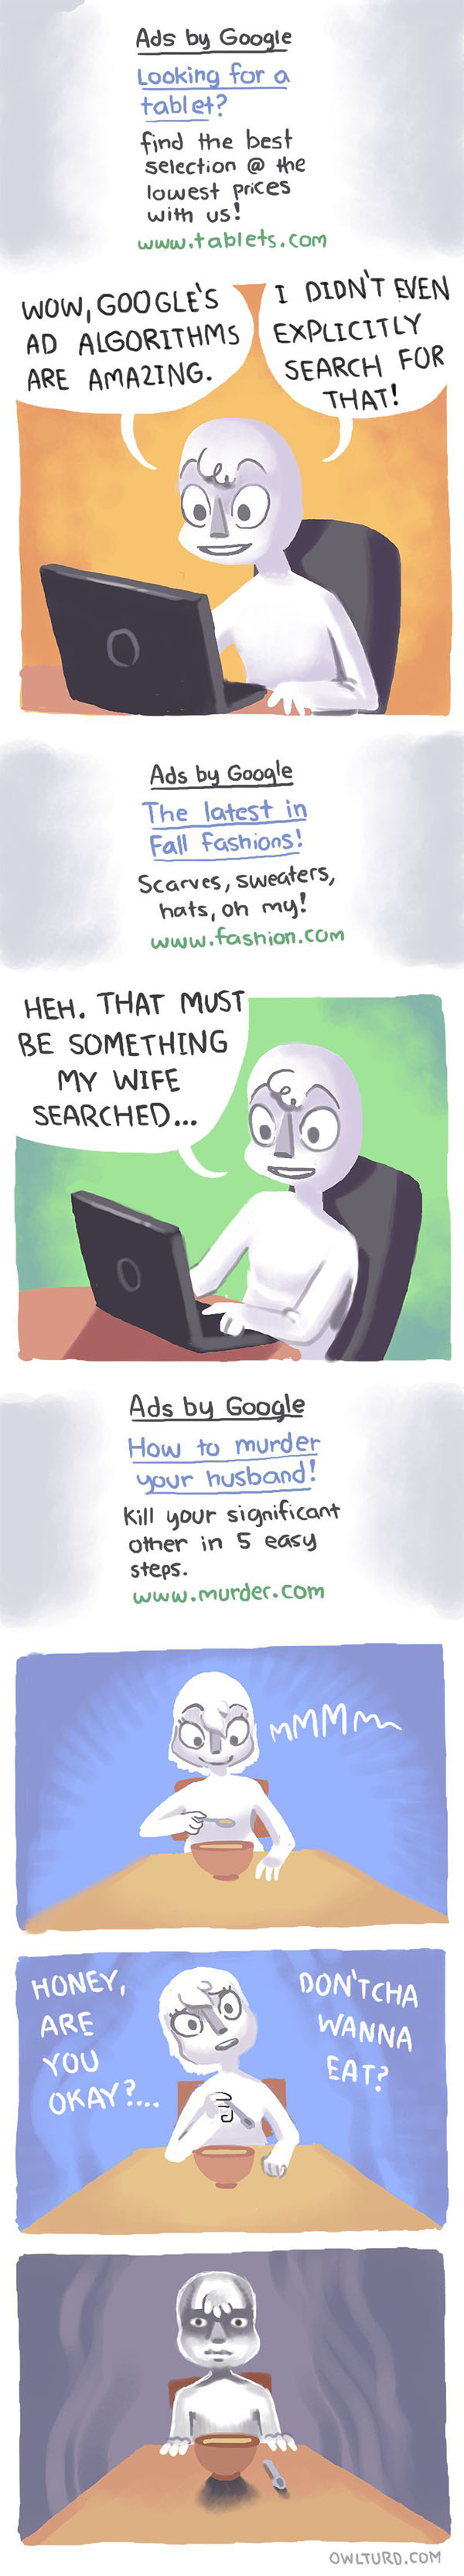 Google Adverts